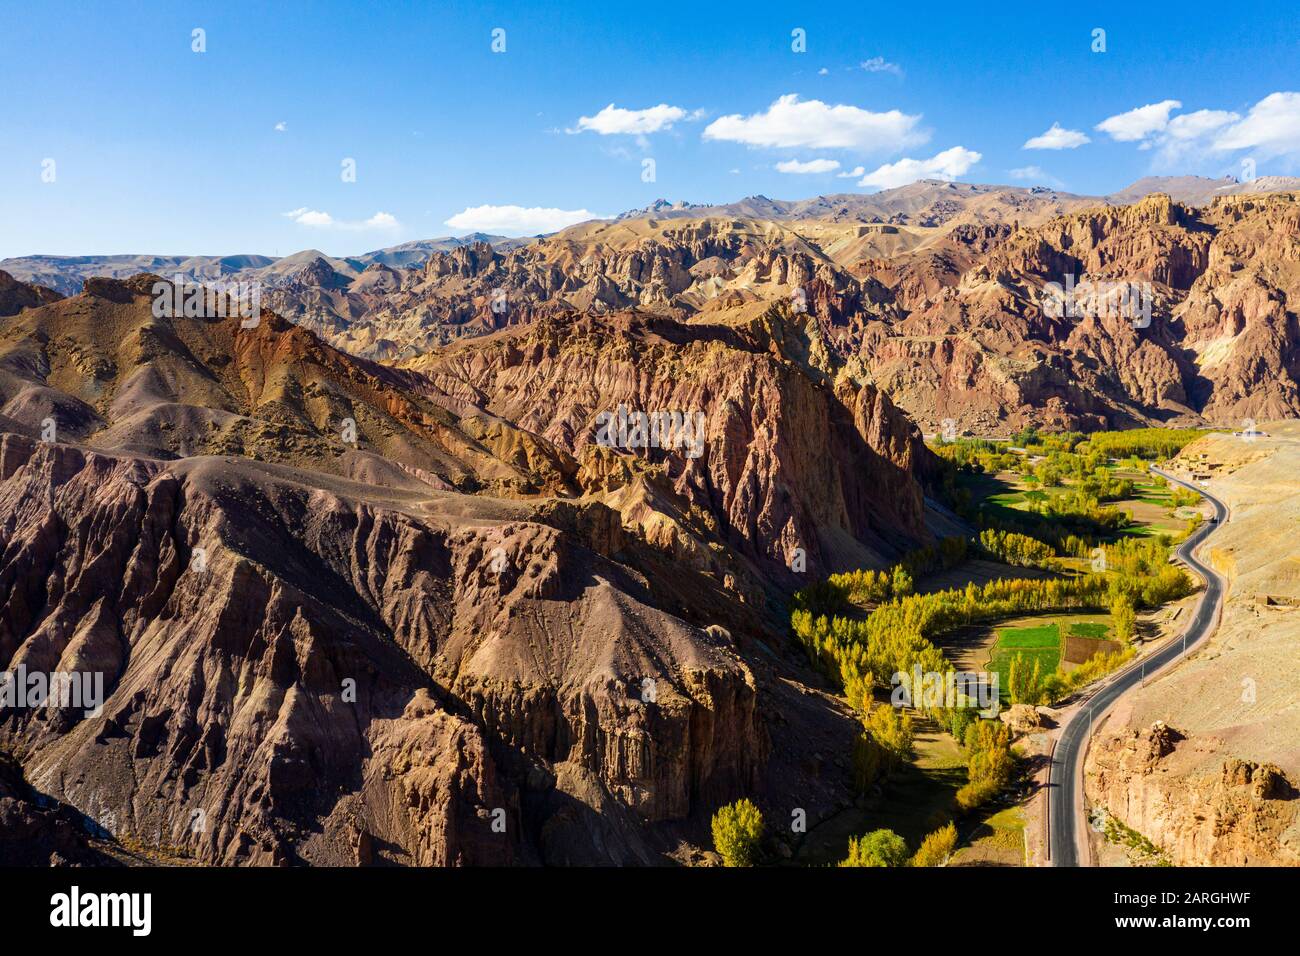 Montañas de afganistán fotografías e imágenes de alta resolución - Alamy